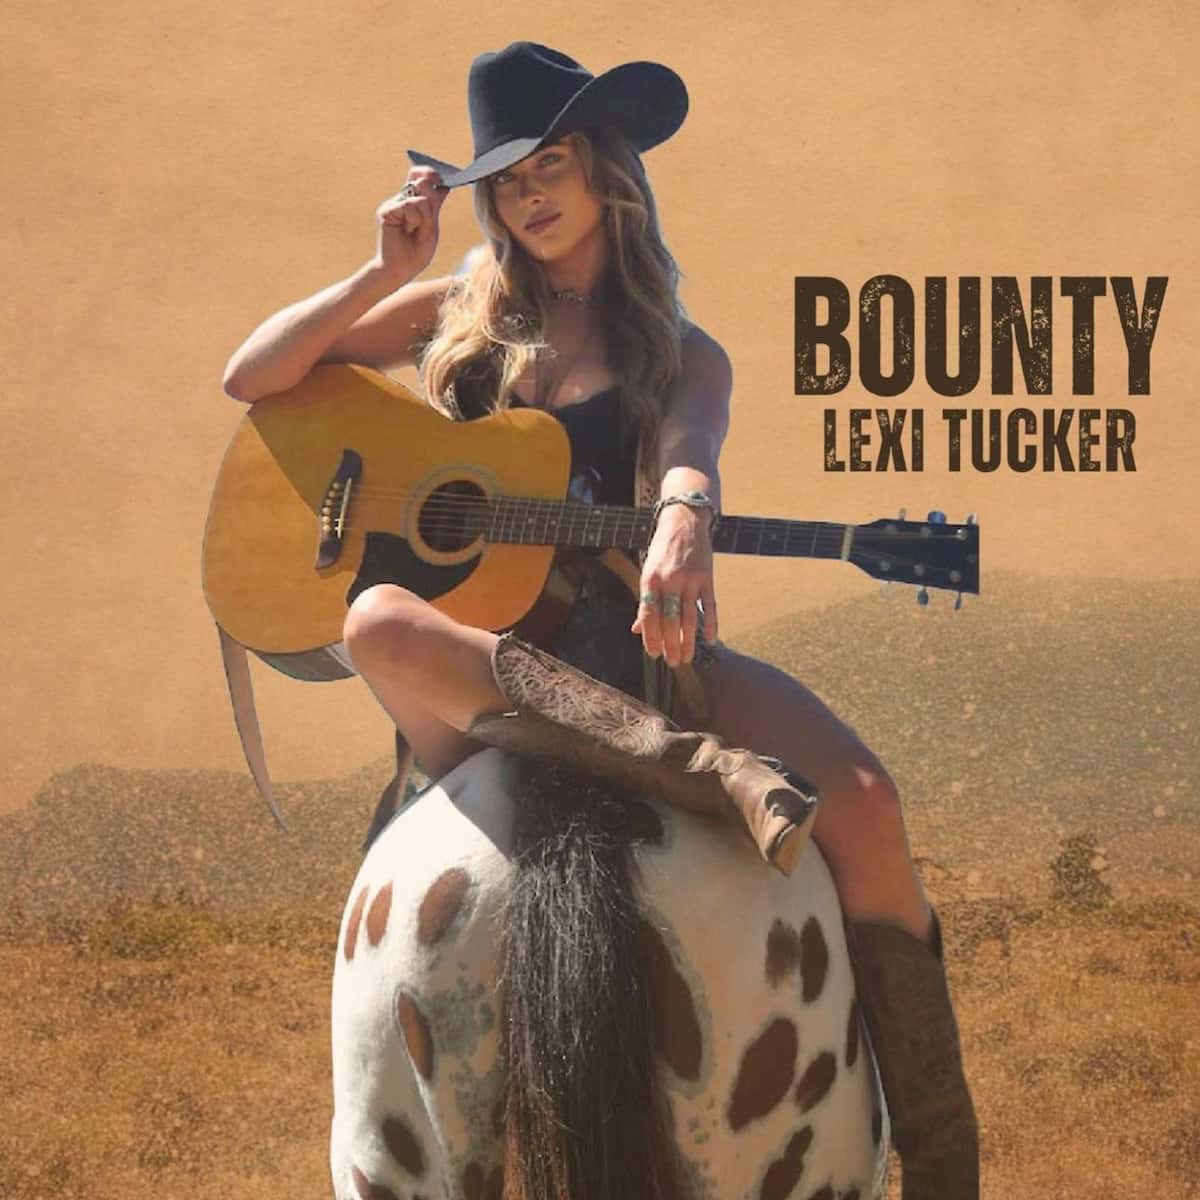 Lexi Tucker 2023 - hier im Bild das Single-Cover zum Song Bounty